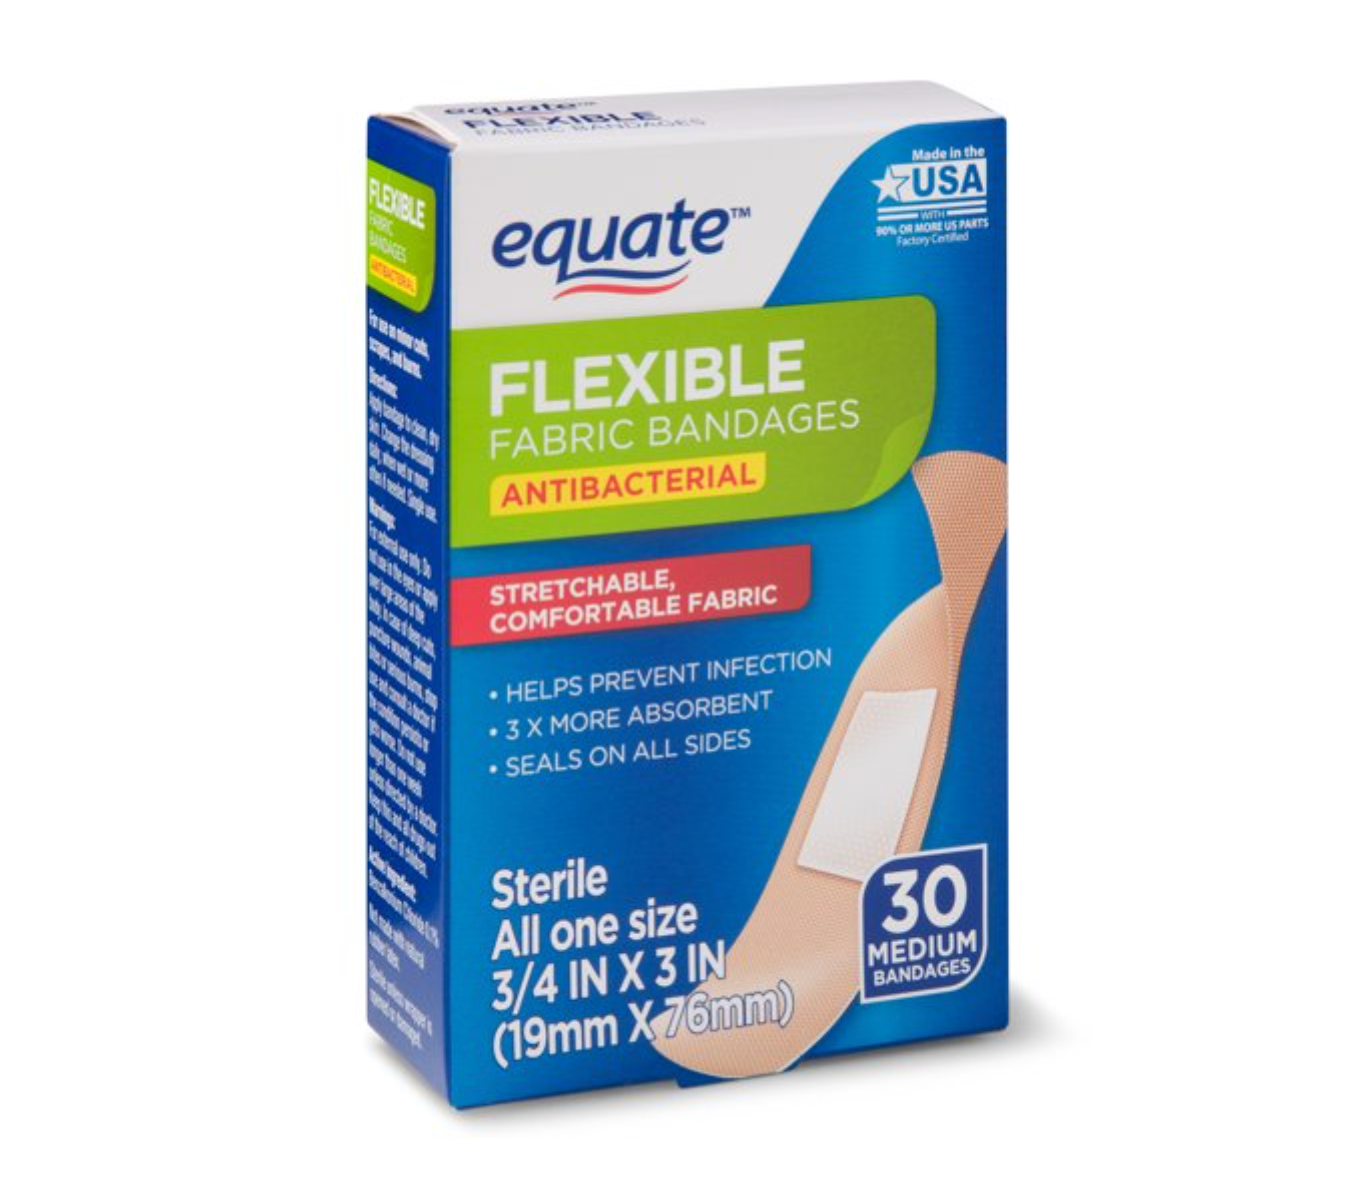 DDM Antibacterial Smart-Flex Extra Large Adhesive Bandages 2 3/4